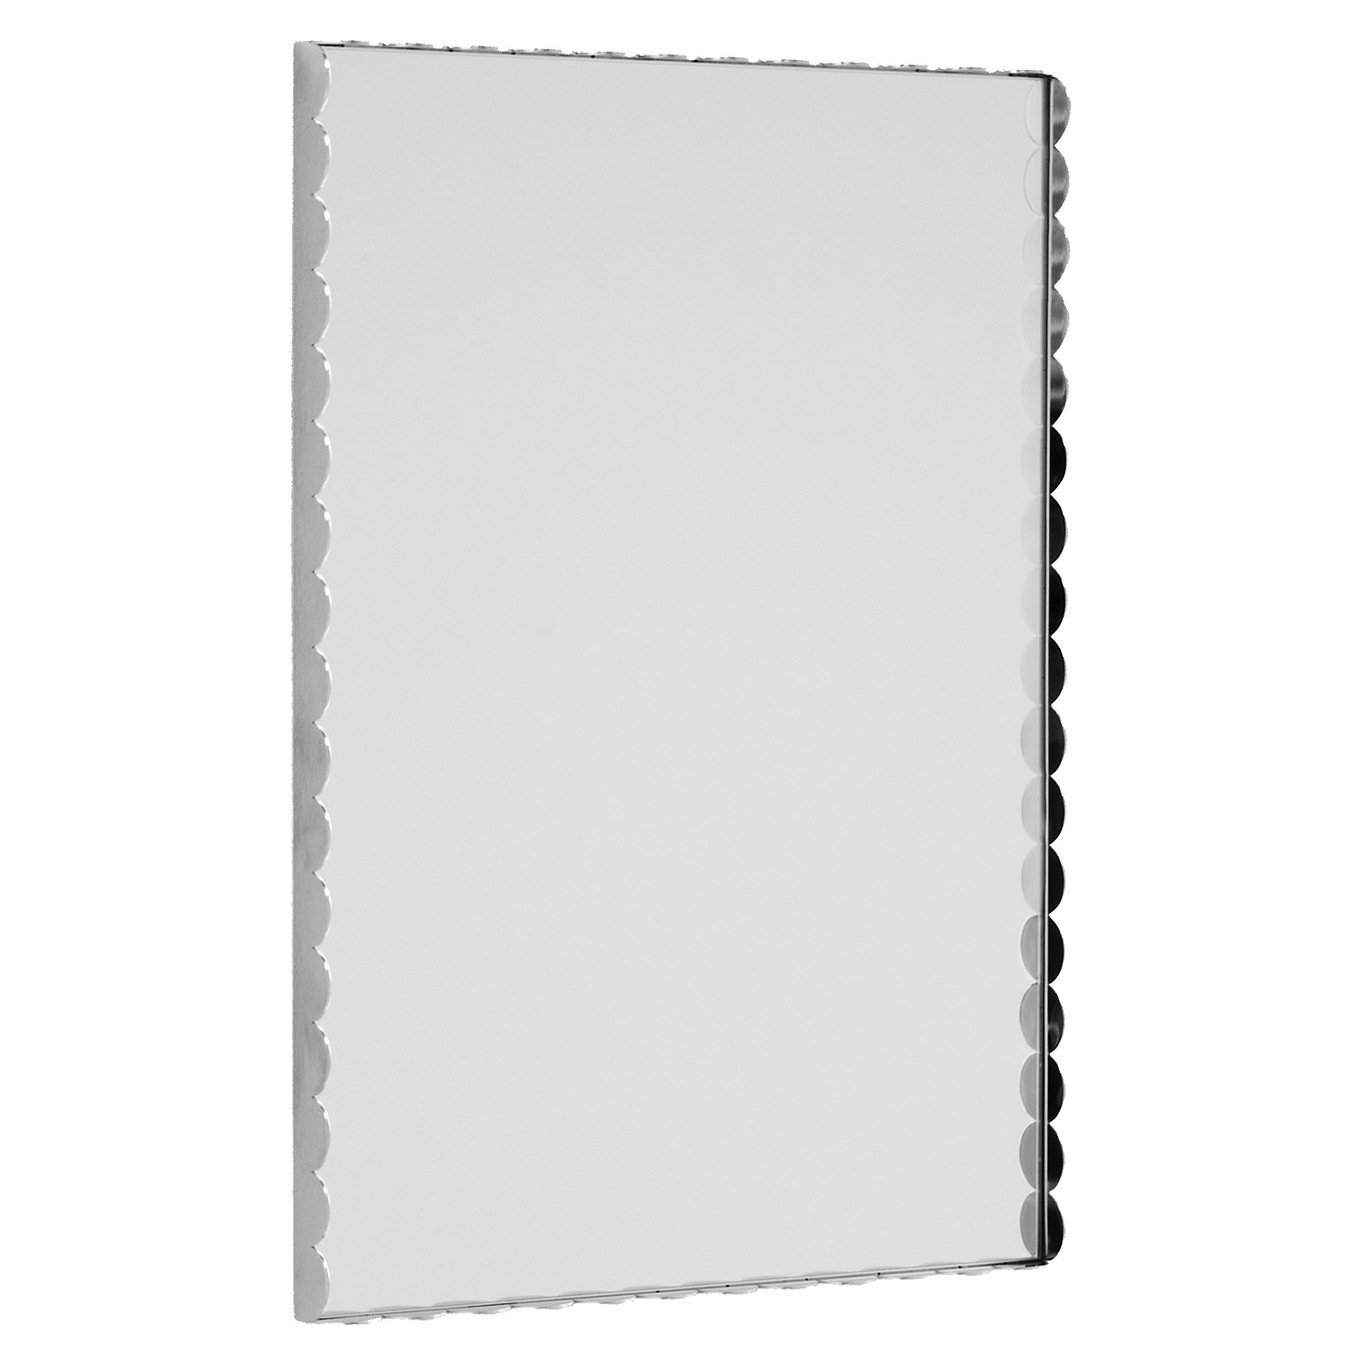 Arcs Speil S 43x61 cm, Mirror